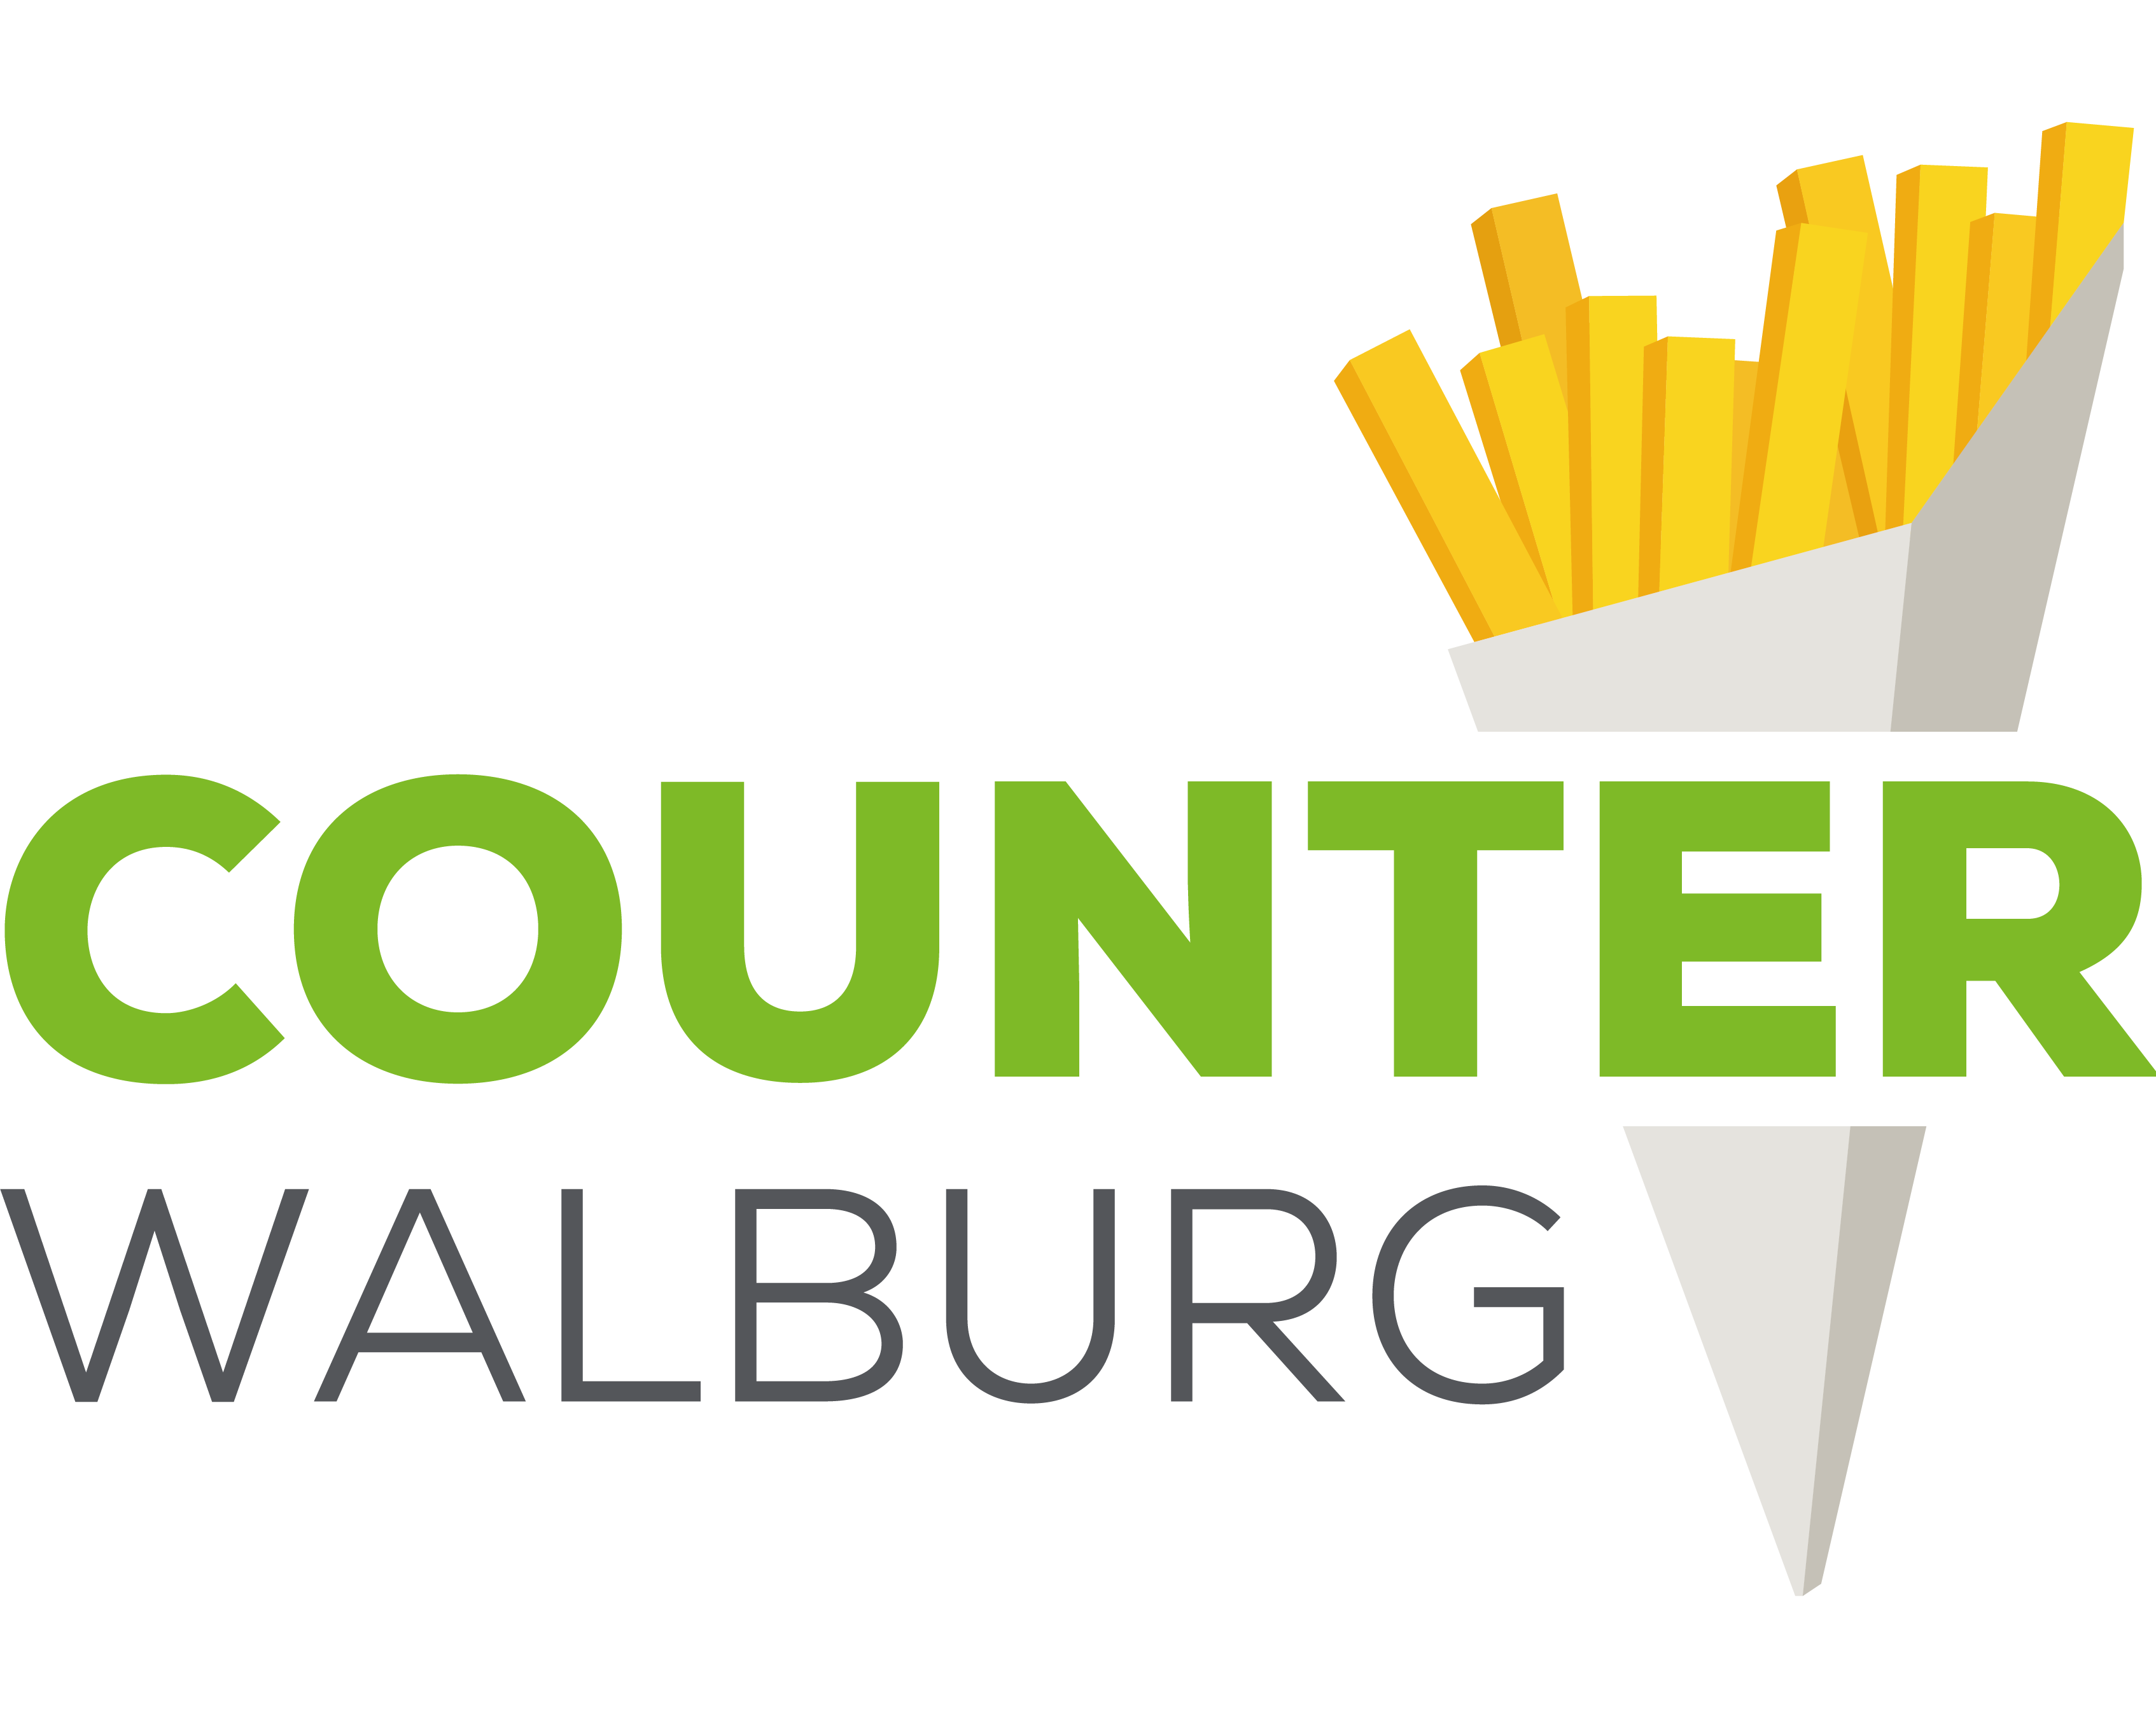 Counter Walburg